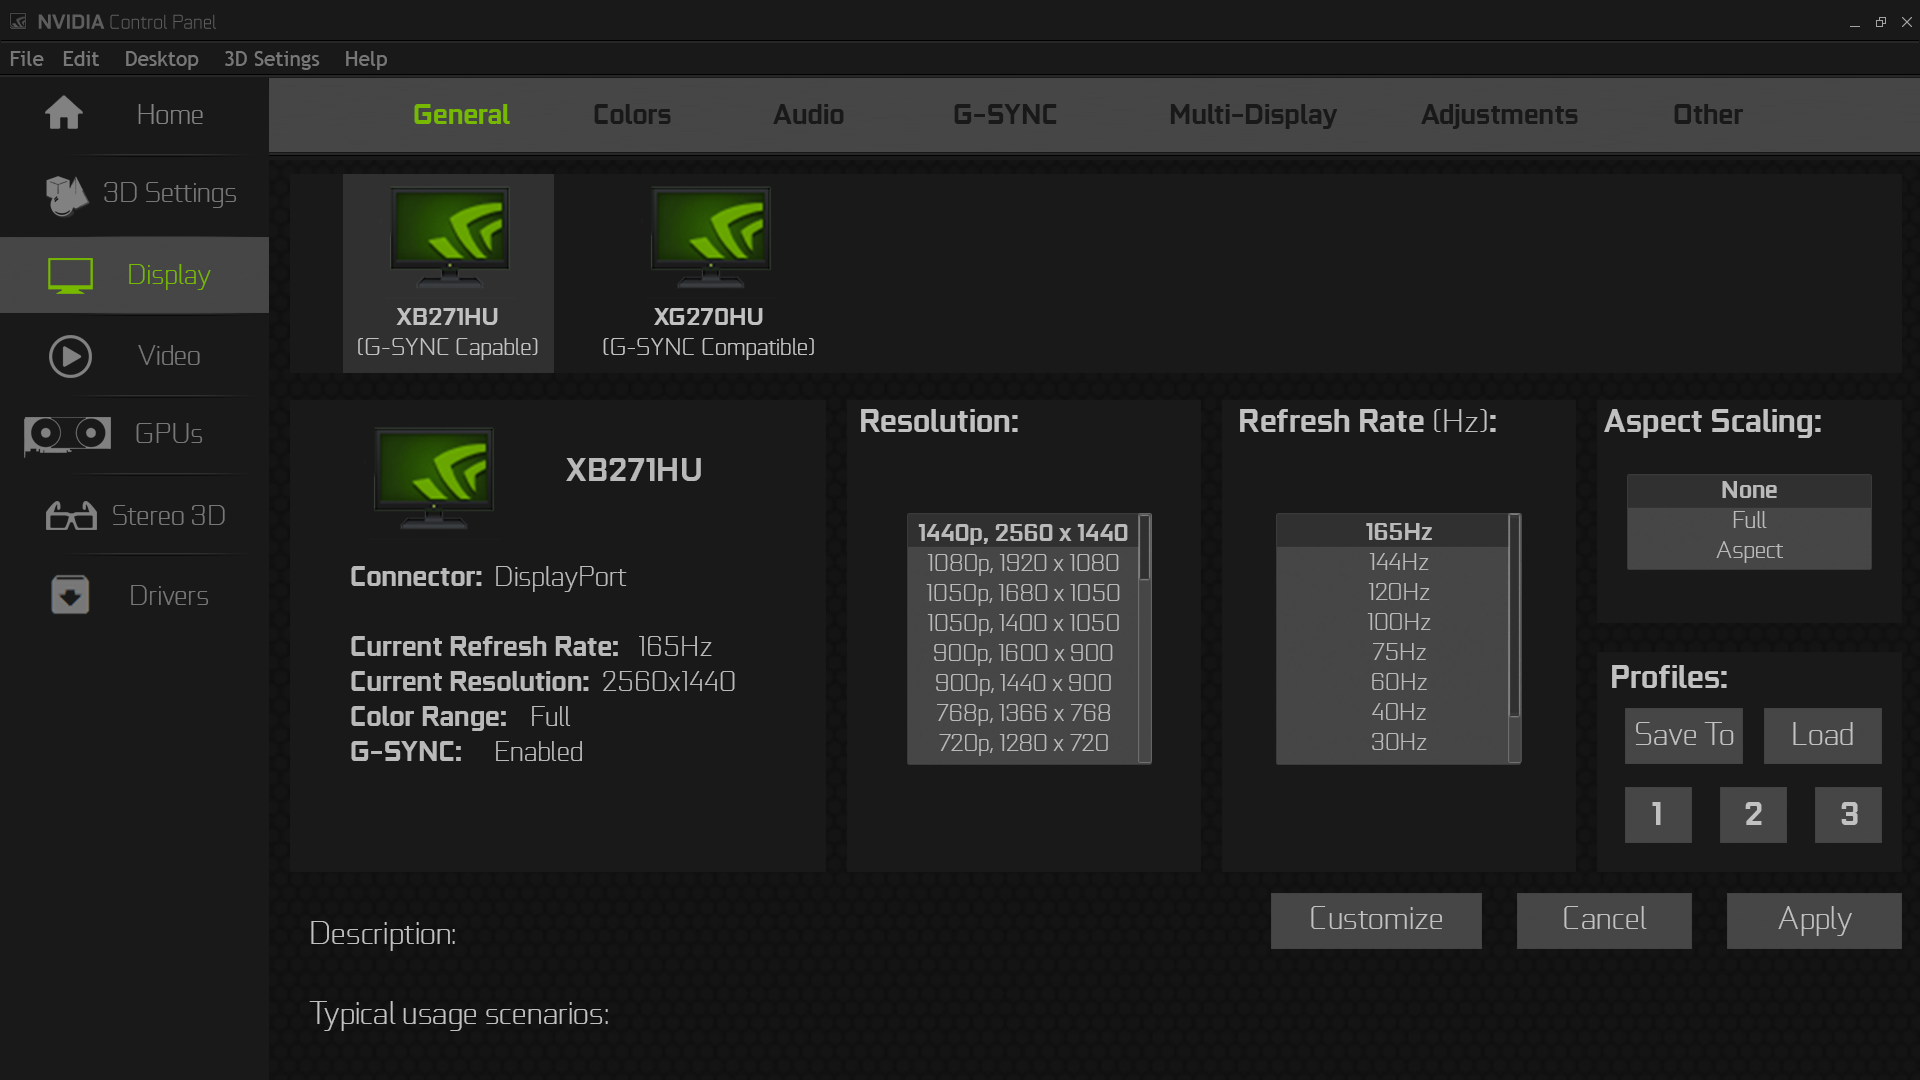 download control panel nvidia